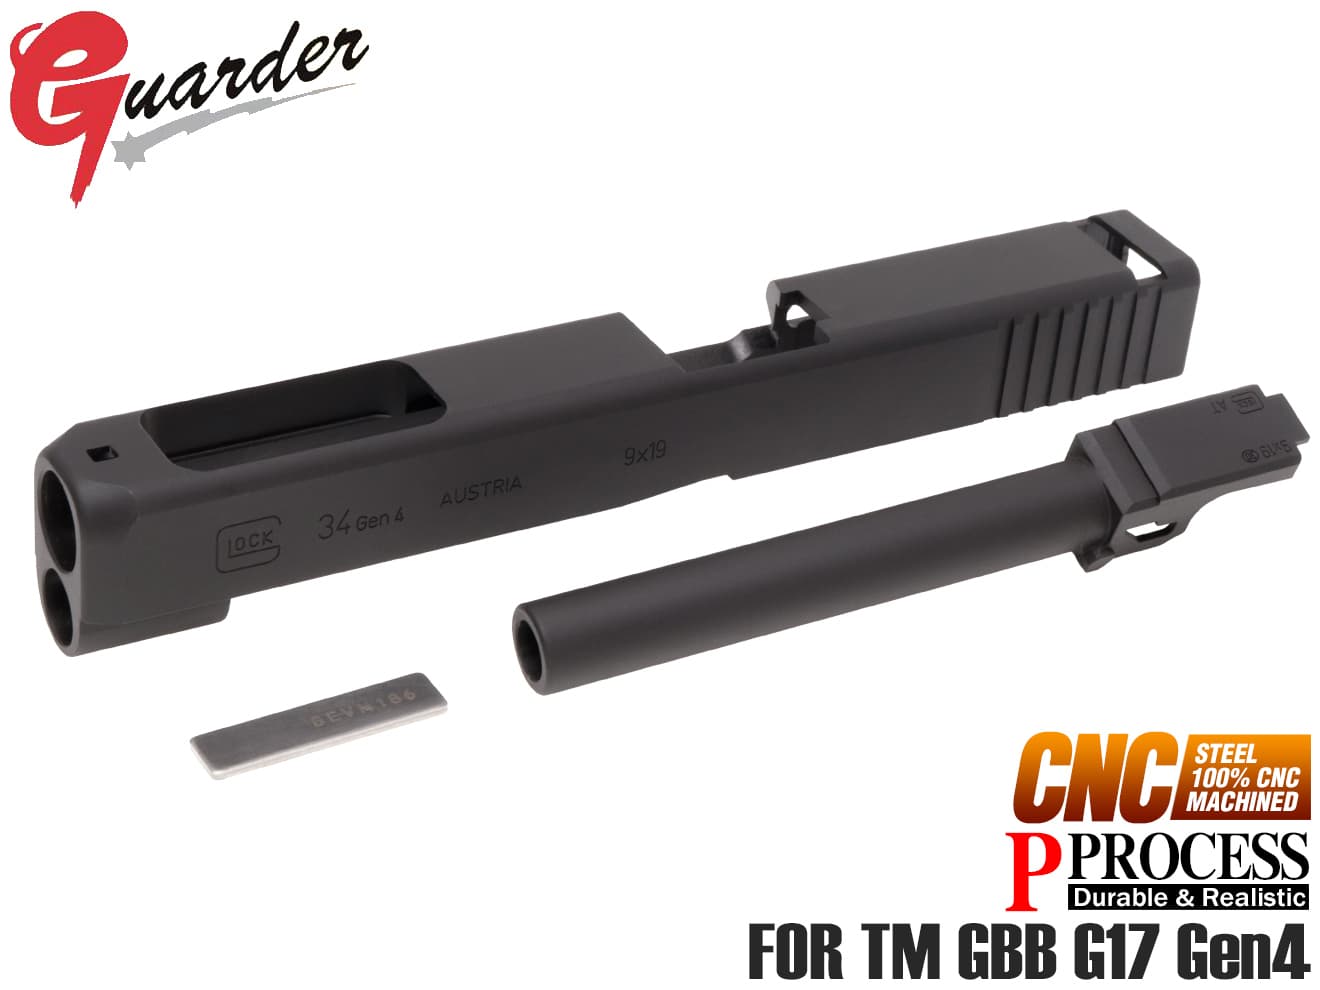 GUARDER G34 Gen4 9mm スチールCNC スライド/バレル セット for マルイ G17 Gen4